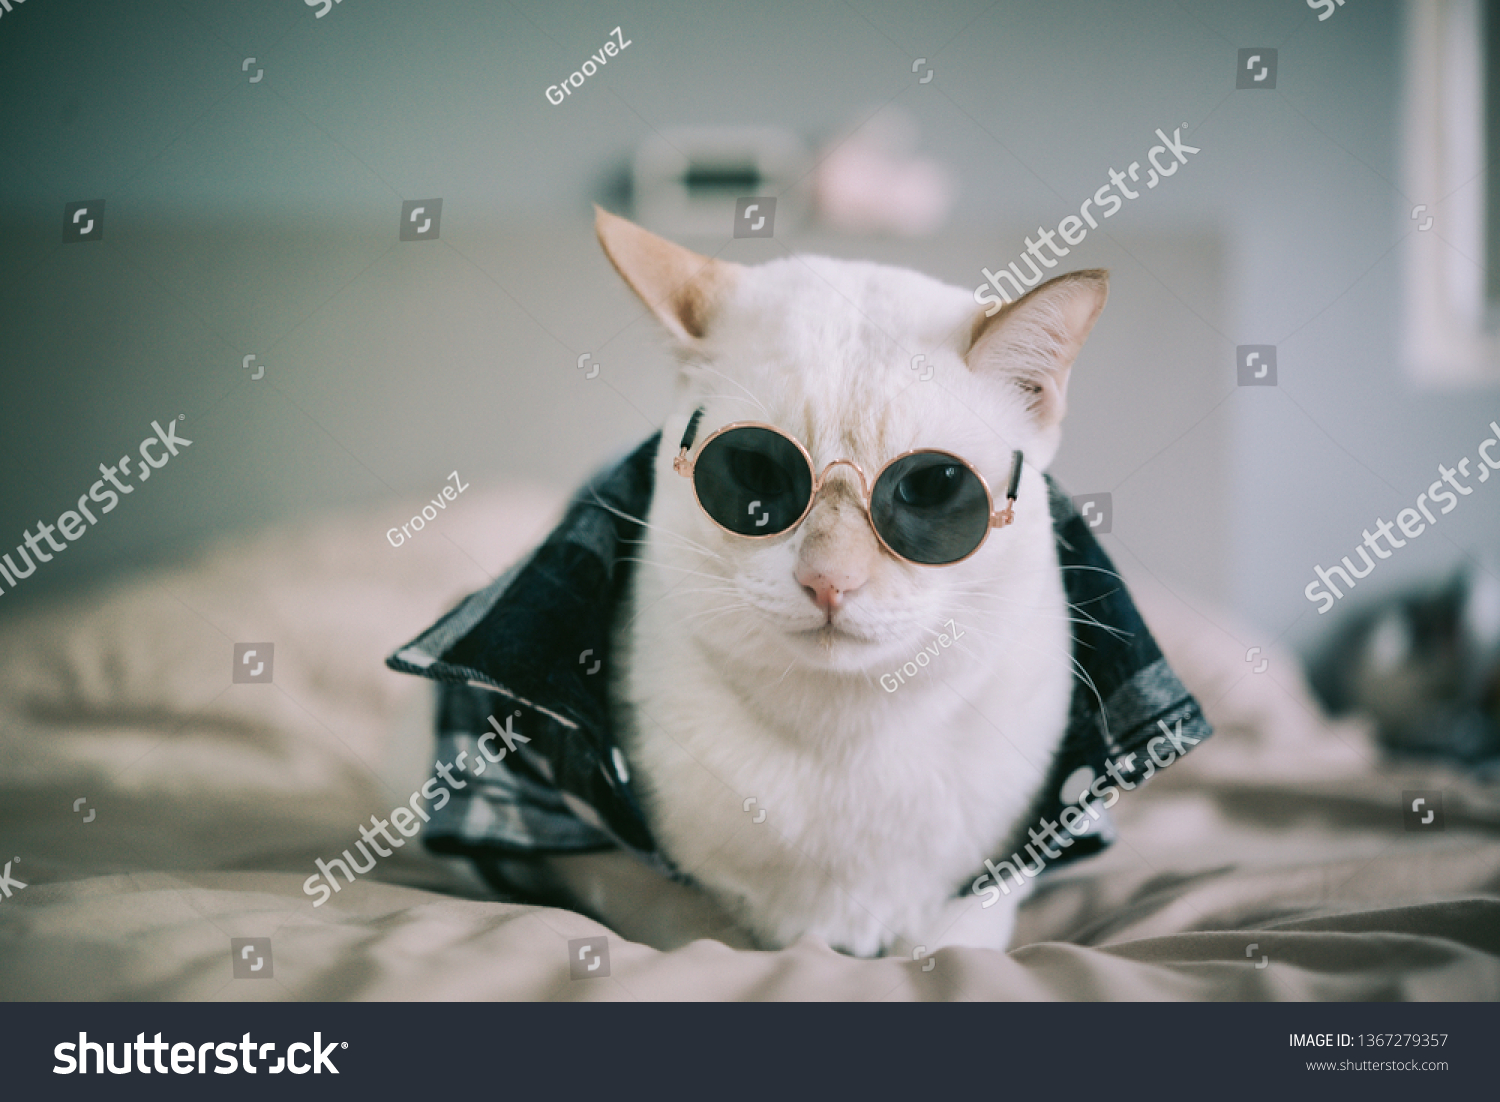 171 Mafia cat Stock Photos, Images & Photography | Shutterstock